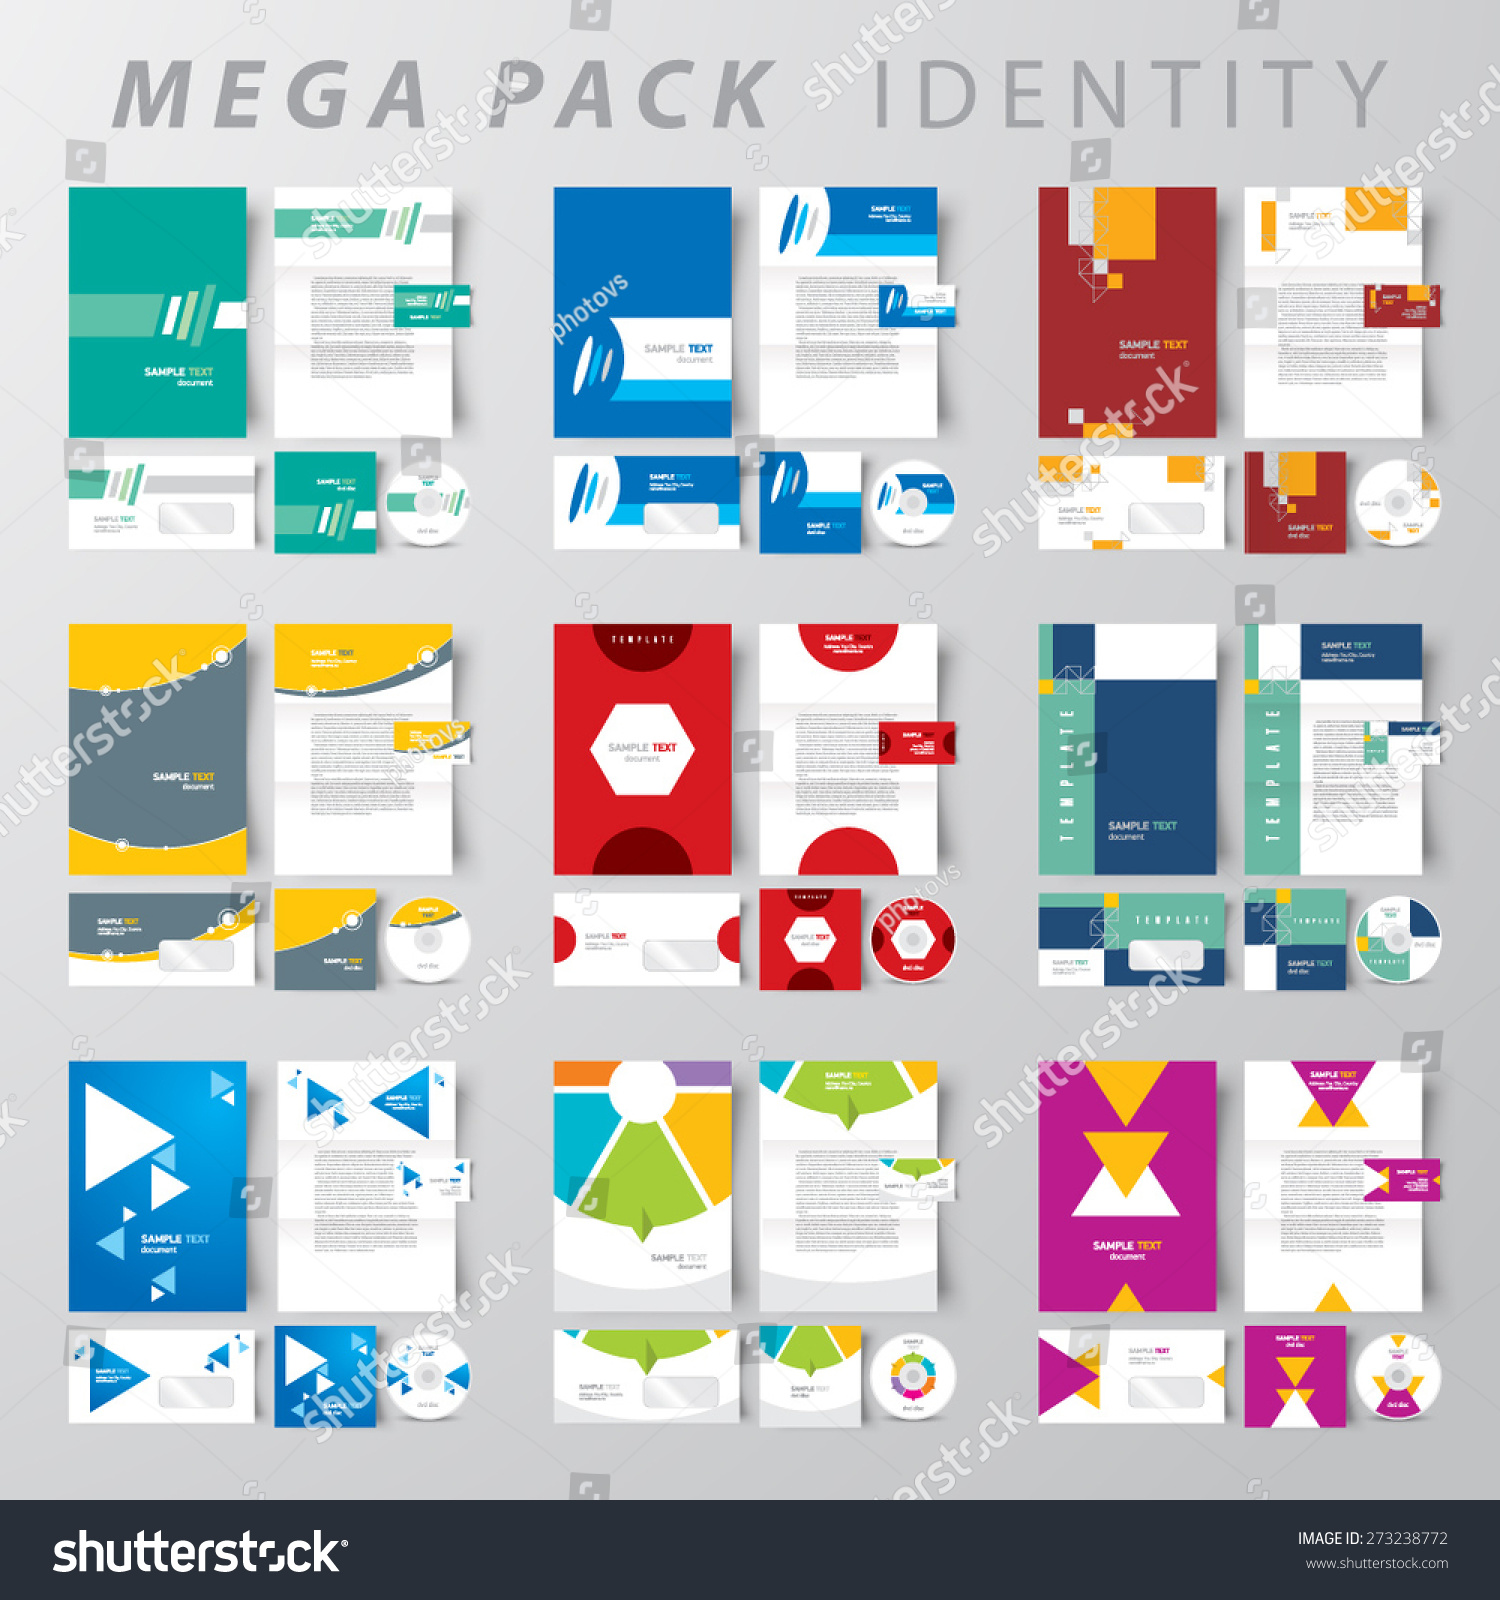 clipart design mega pack - photo #21